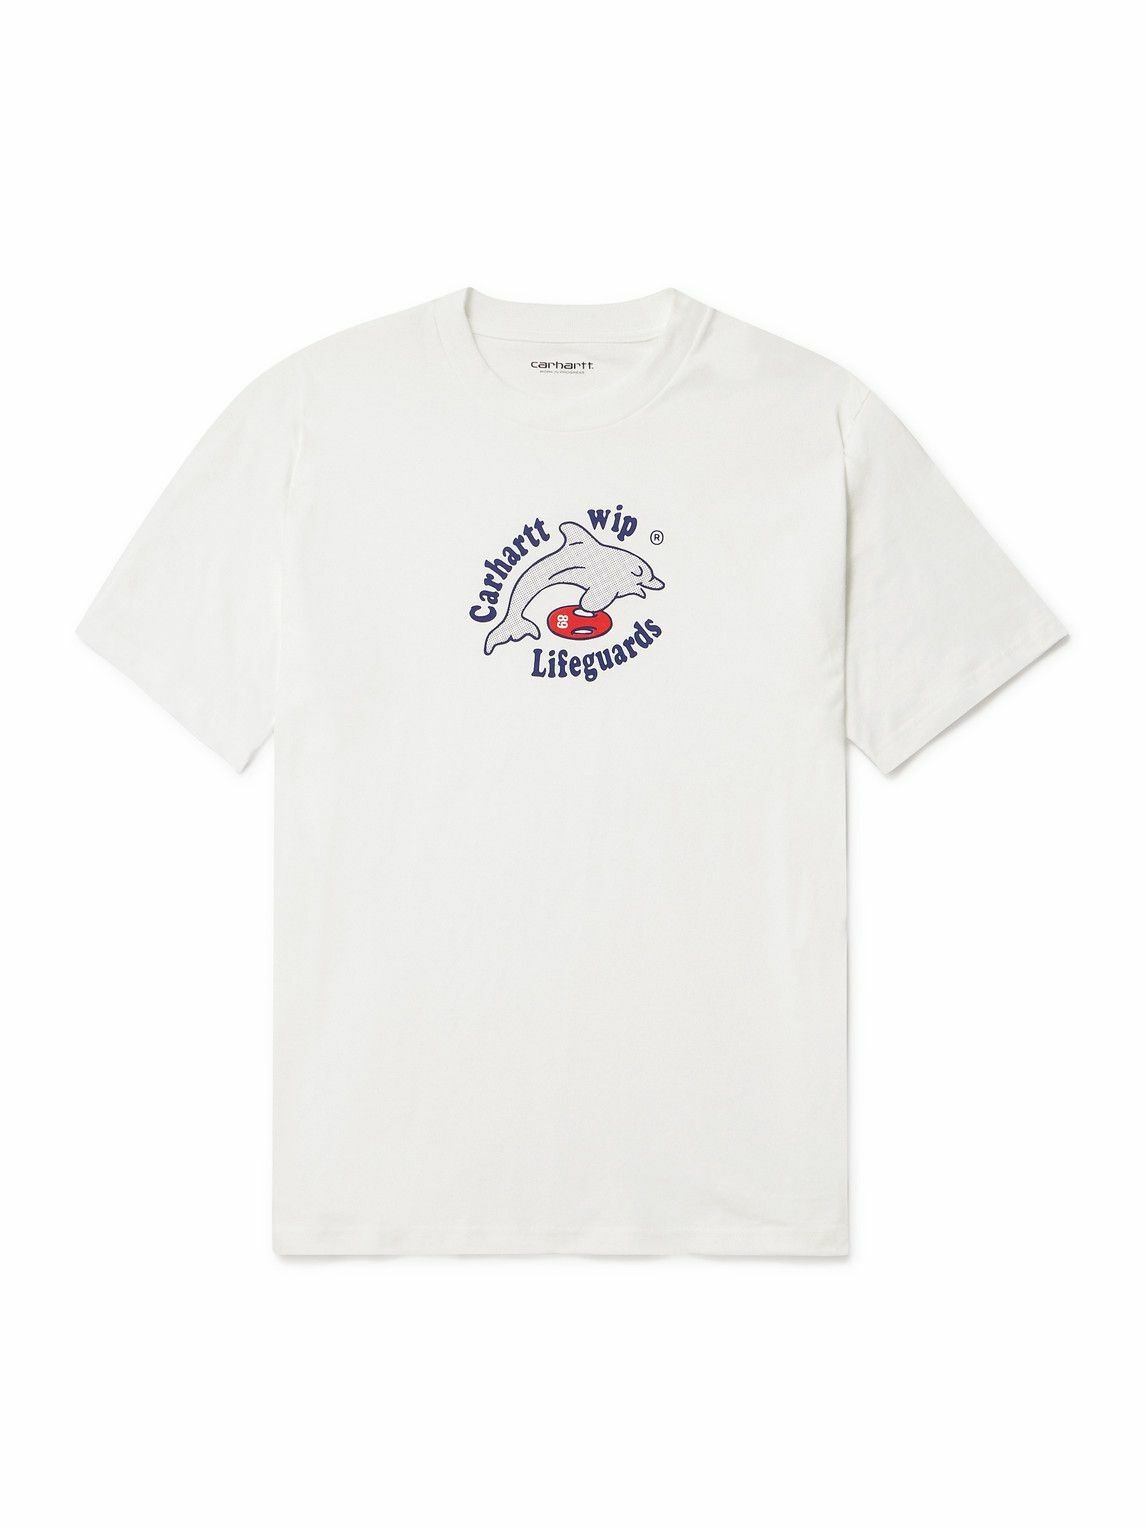 Carhartt WIP - Lifeguards Logo-Print Cotton-Jersey T-Shirt - White ...